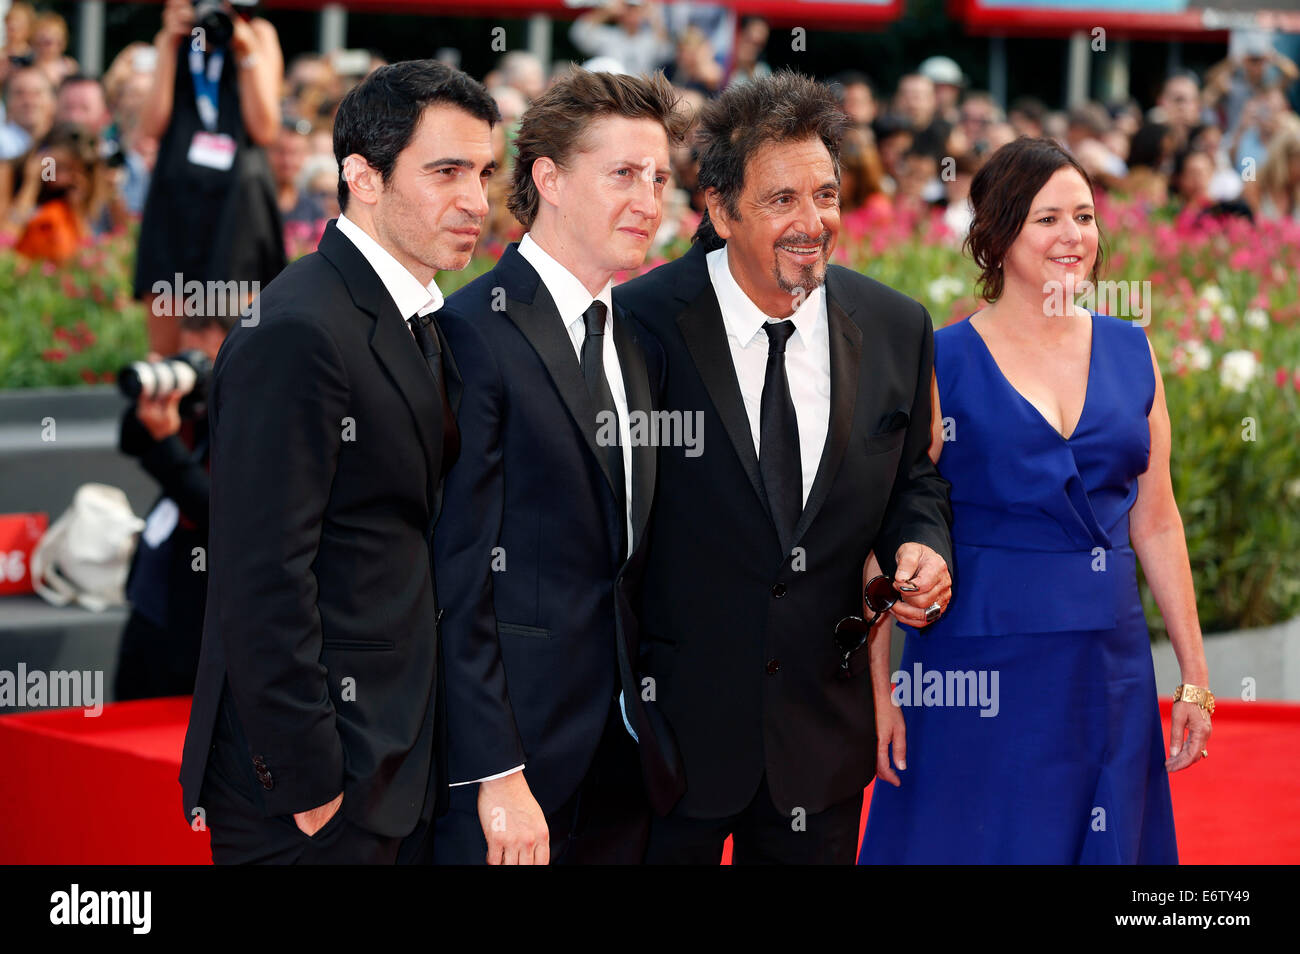 Chris Messina, David Gordon Green, Al Pacino, Lisa Muskat attending the 'Manglehorn' premiere at the 71nd Venice International Film Festival on August 30, 2014. Stock Photo